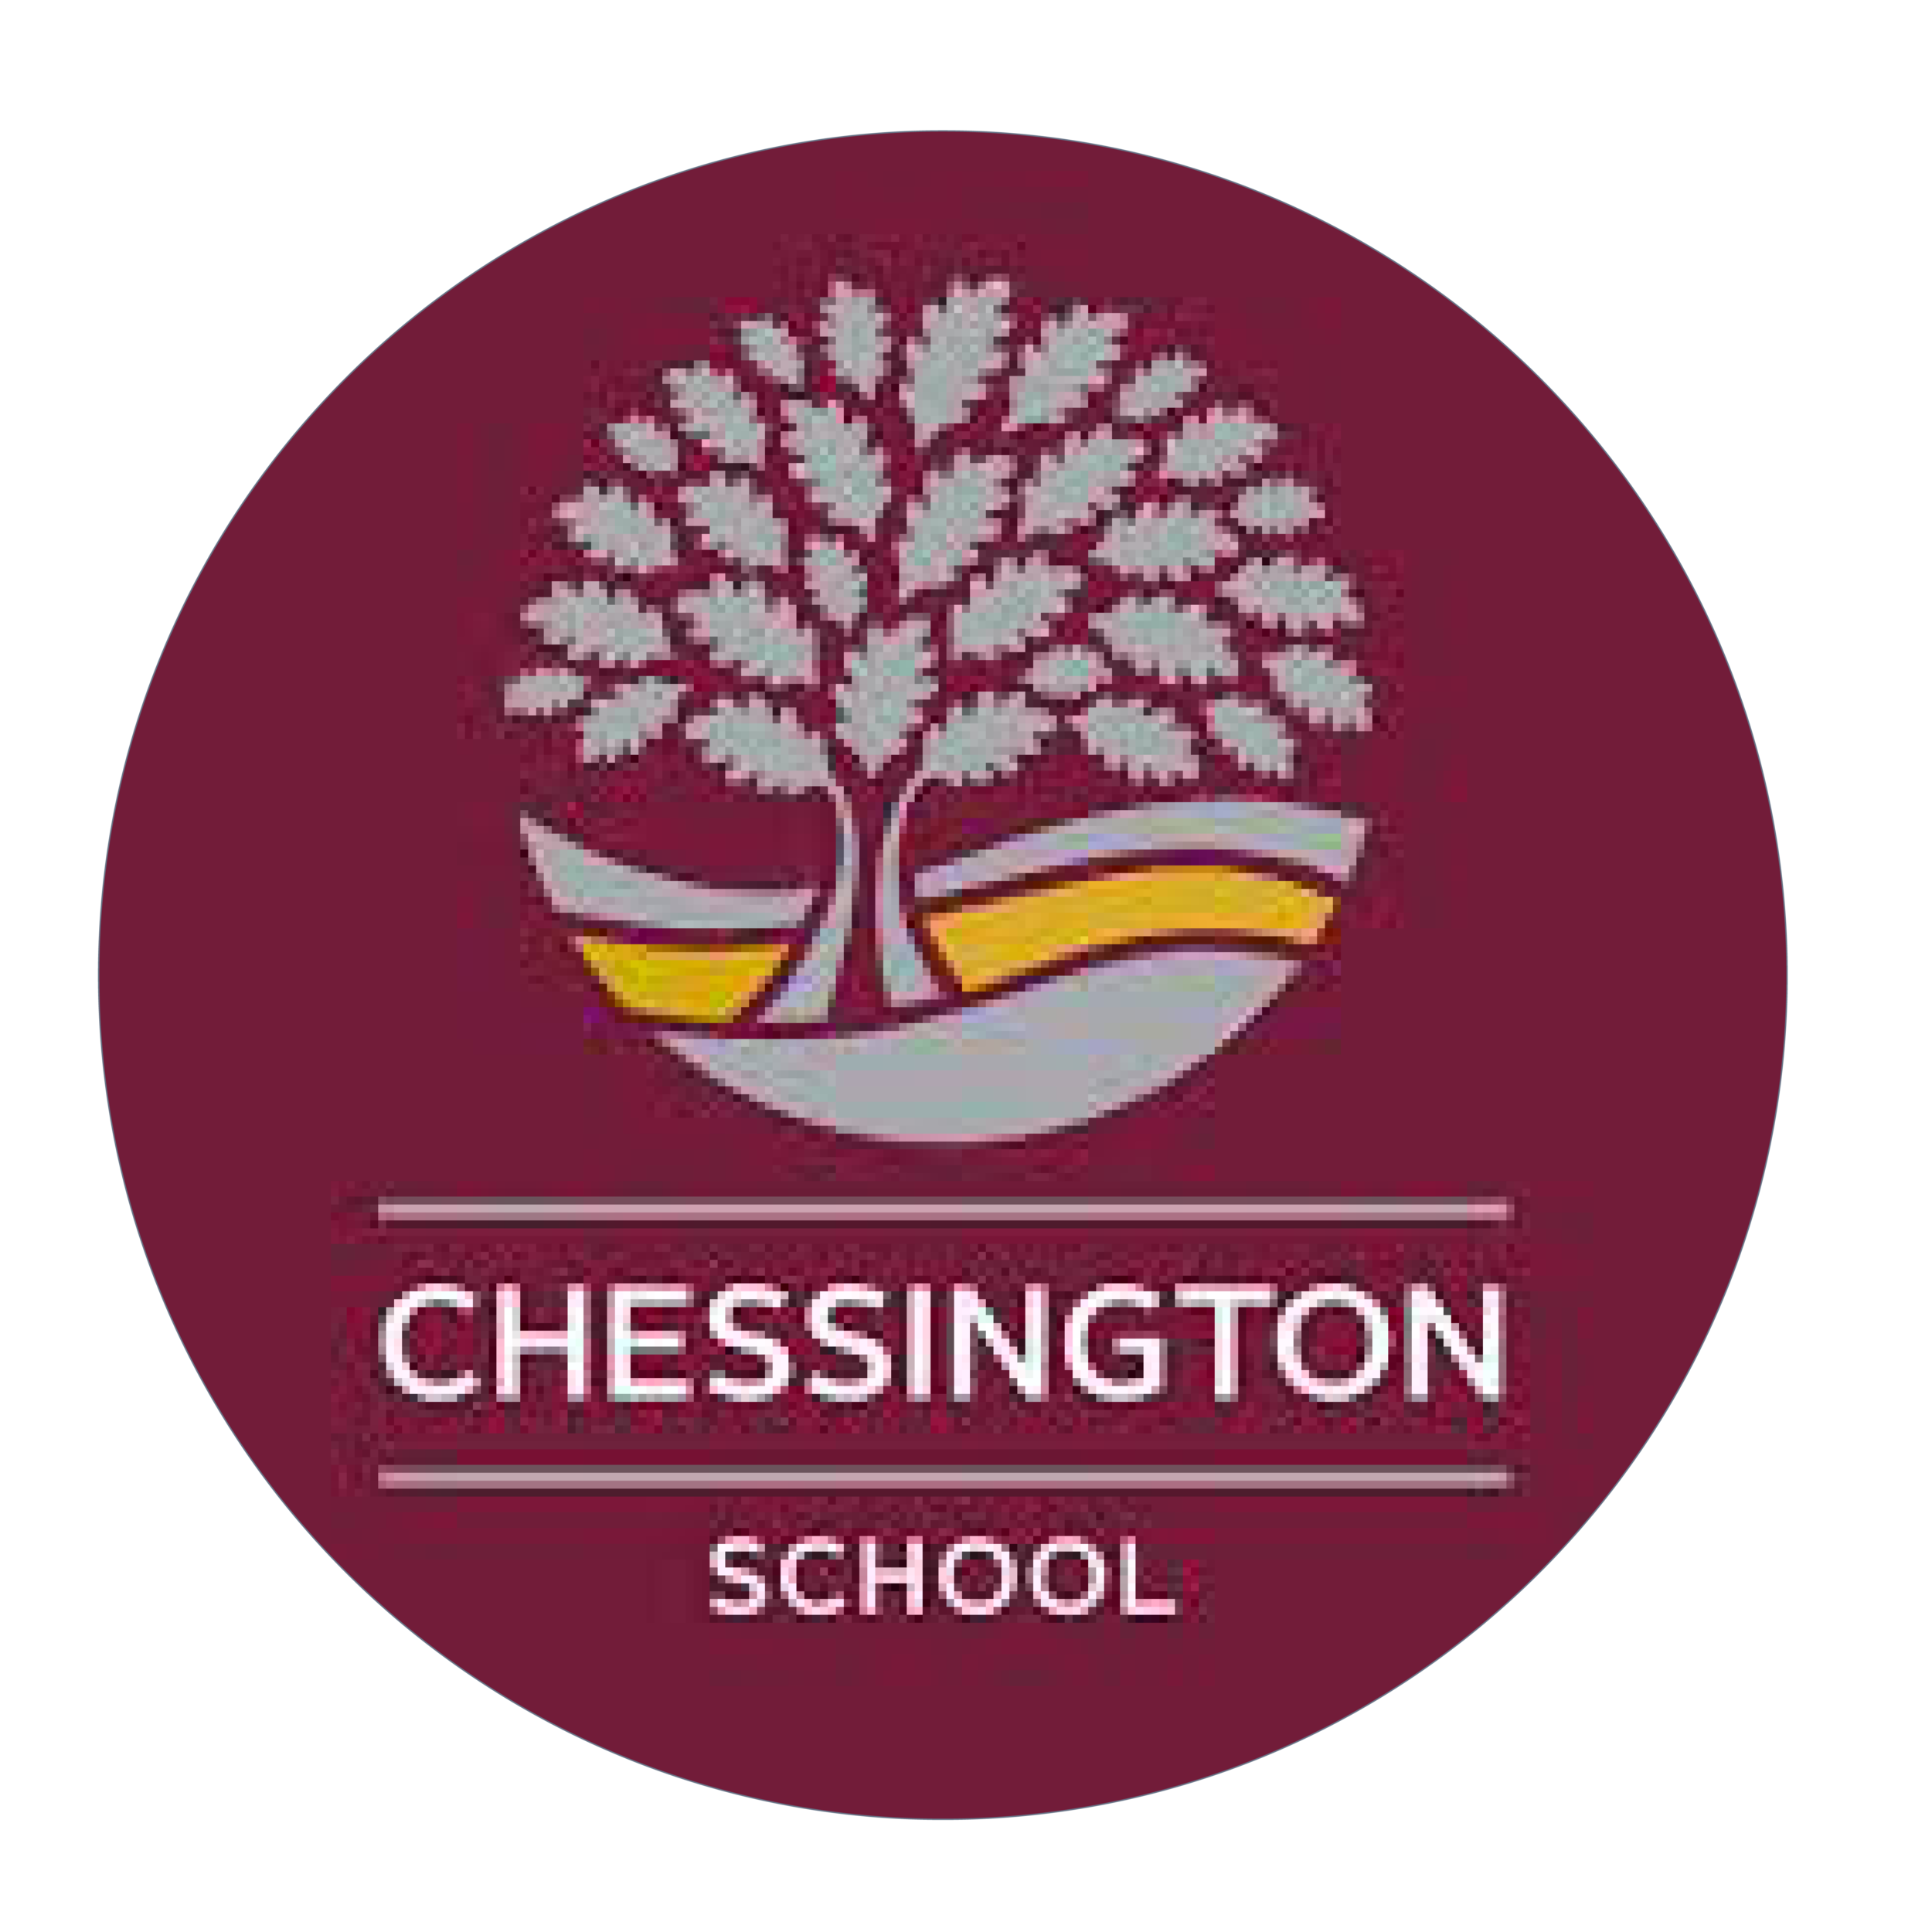 Chessington School